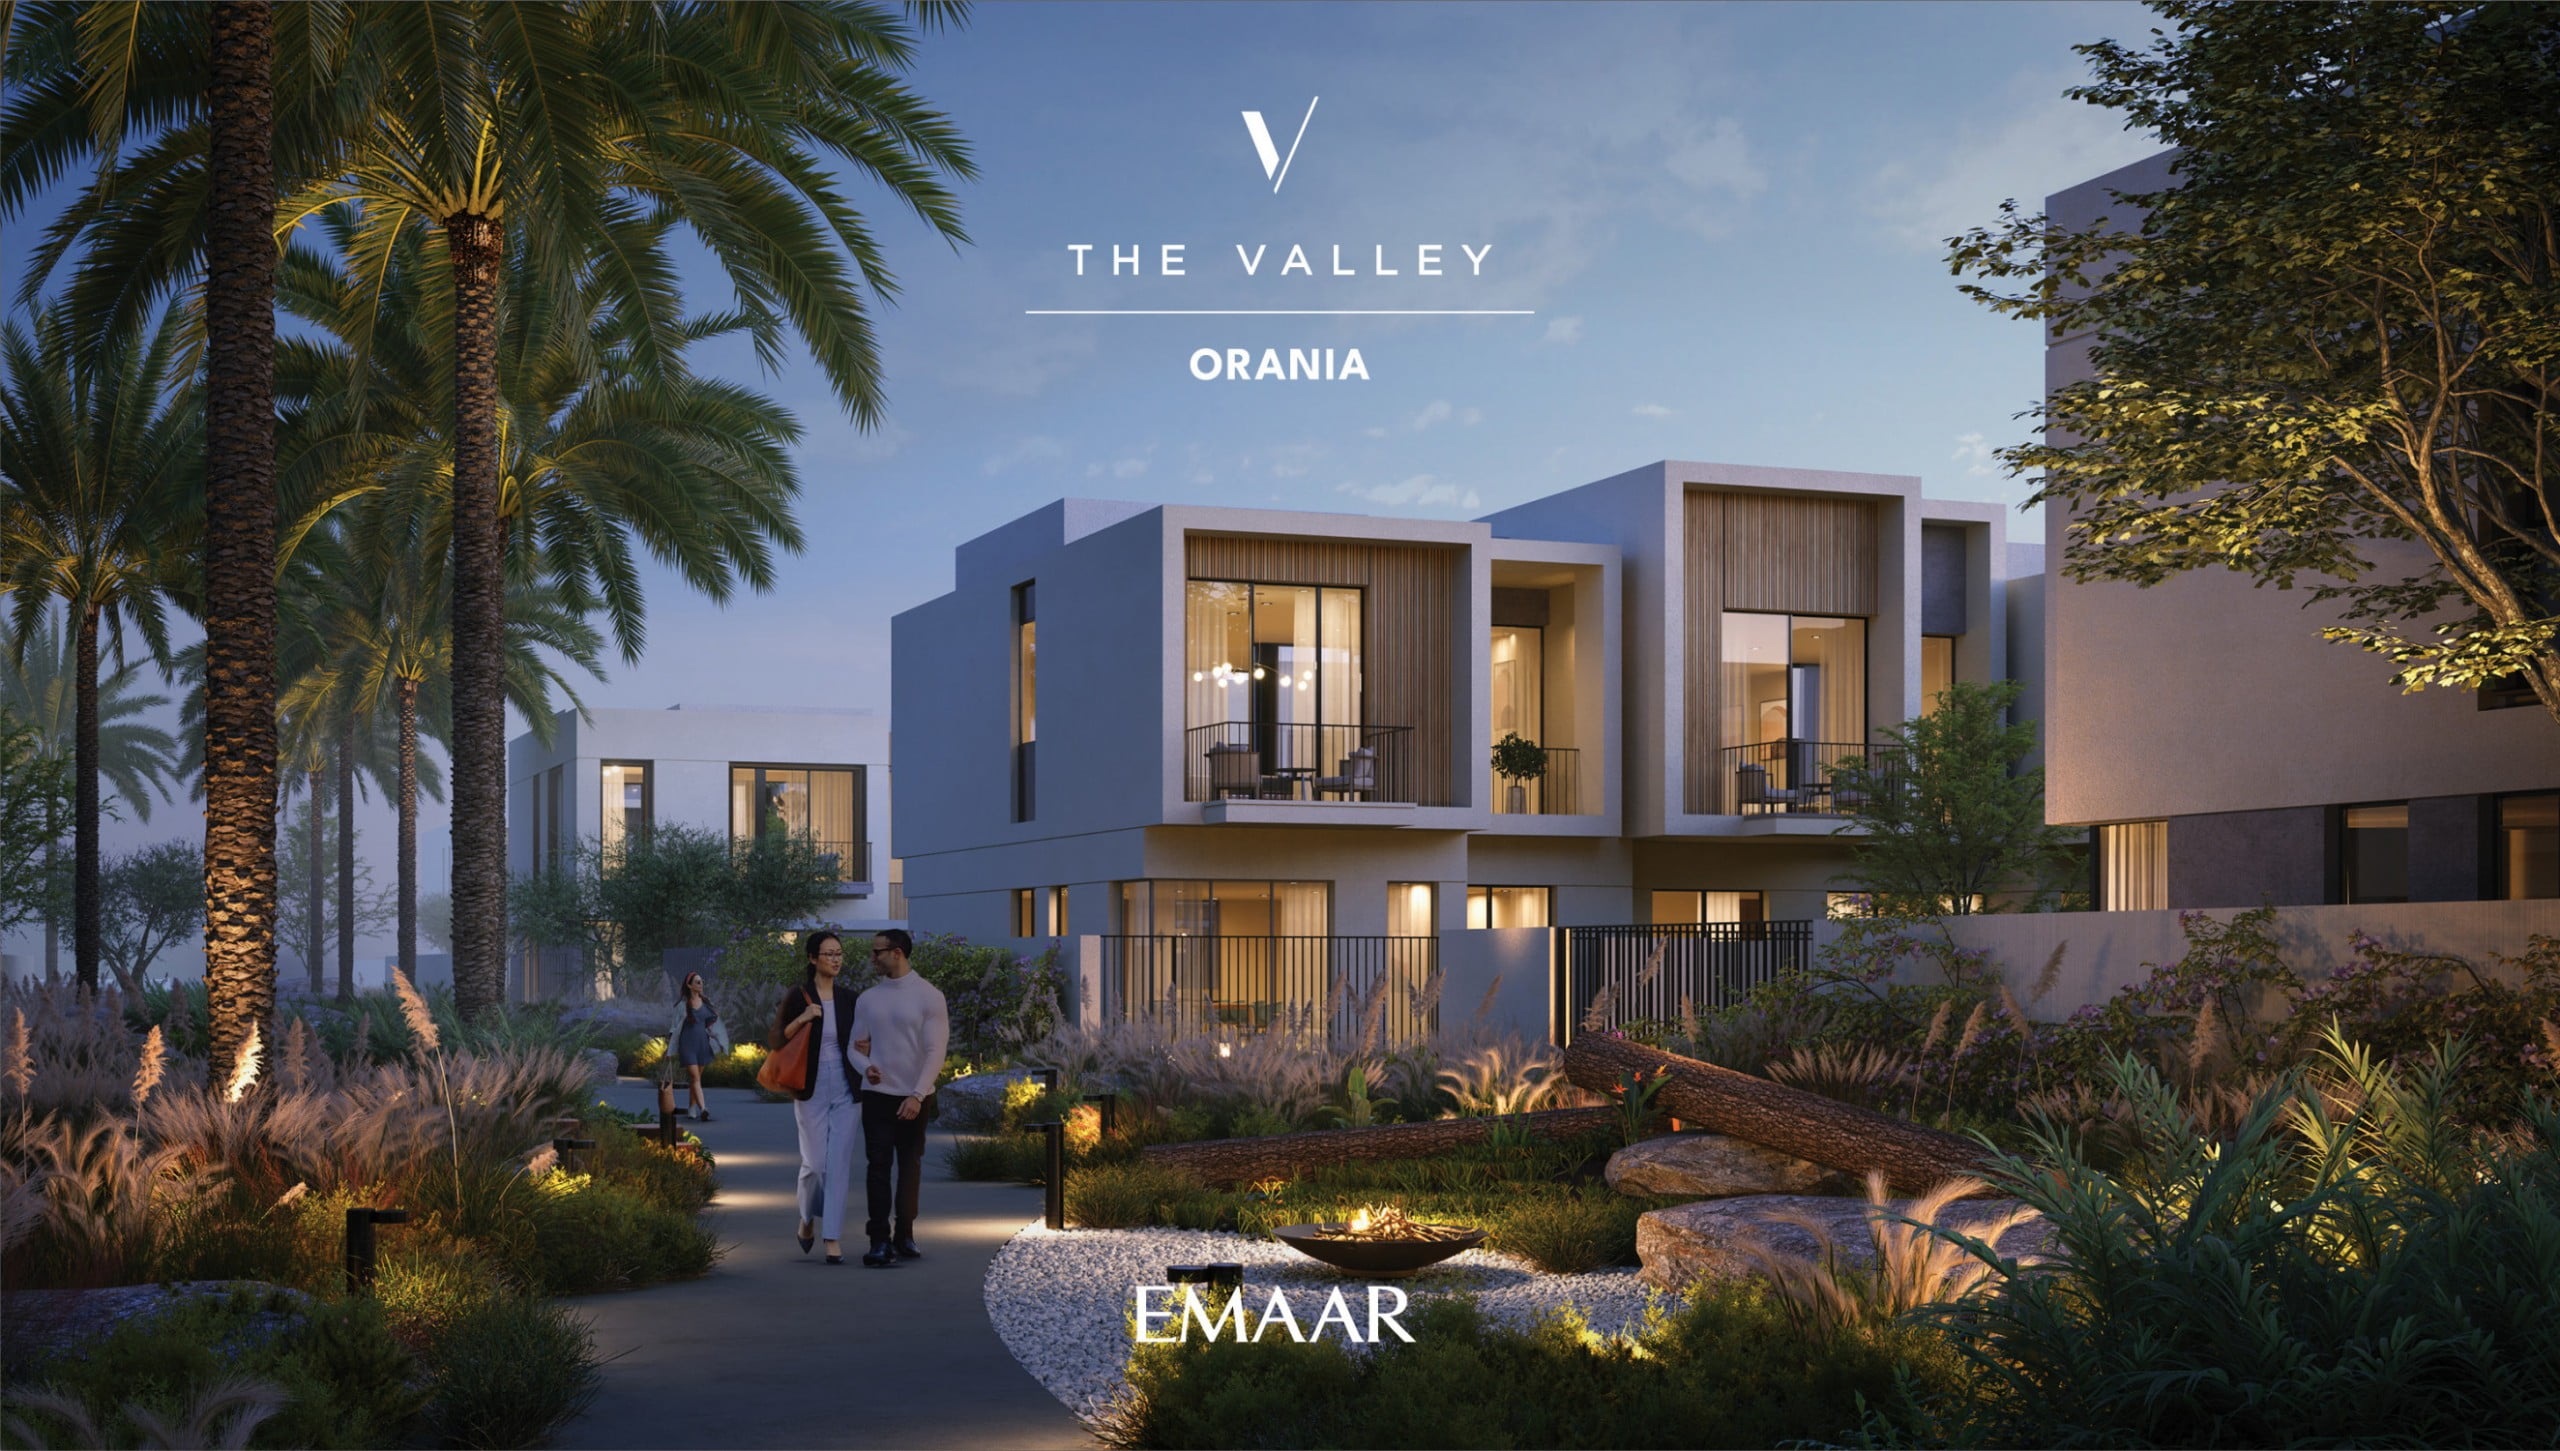 ORANIA THE VALLEY EMAAR 04 scaled - Immobilier Dubai